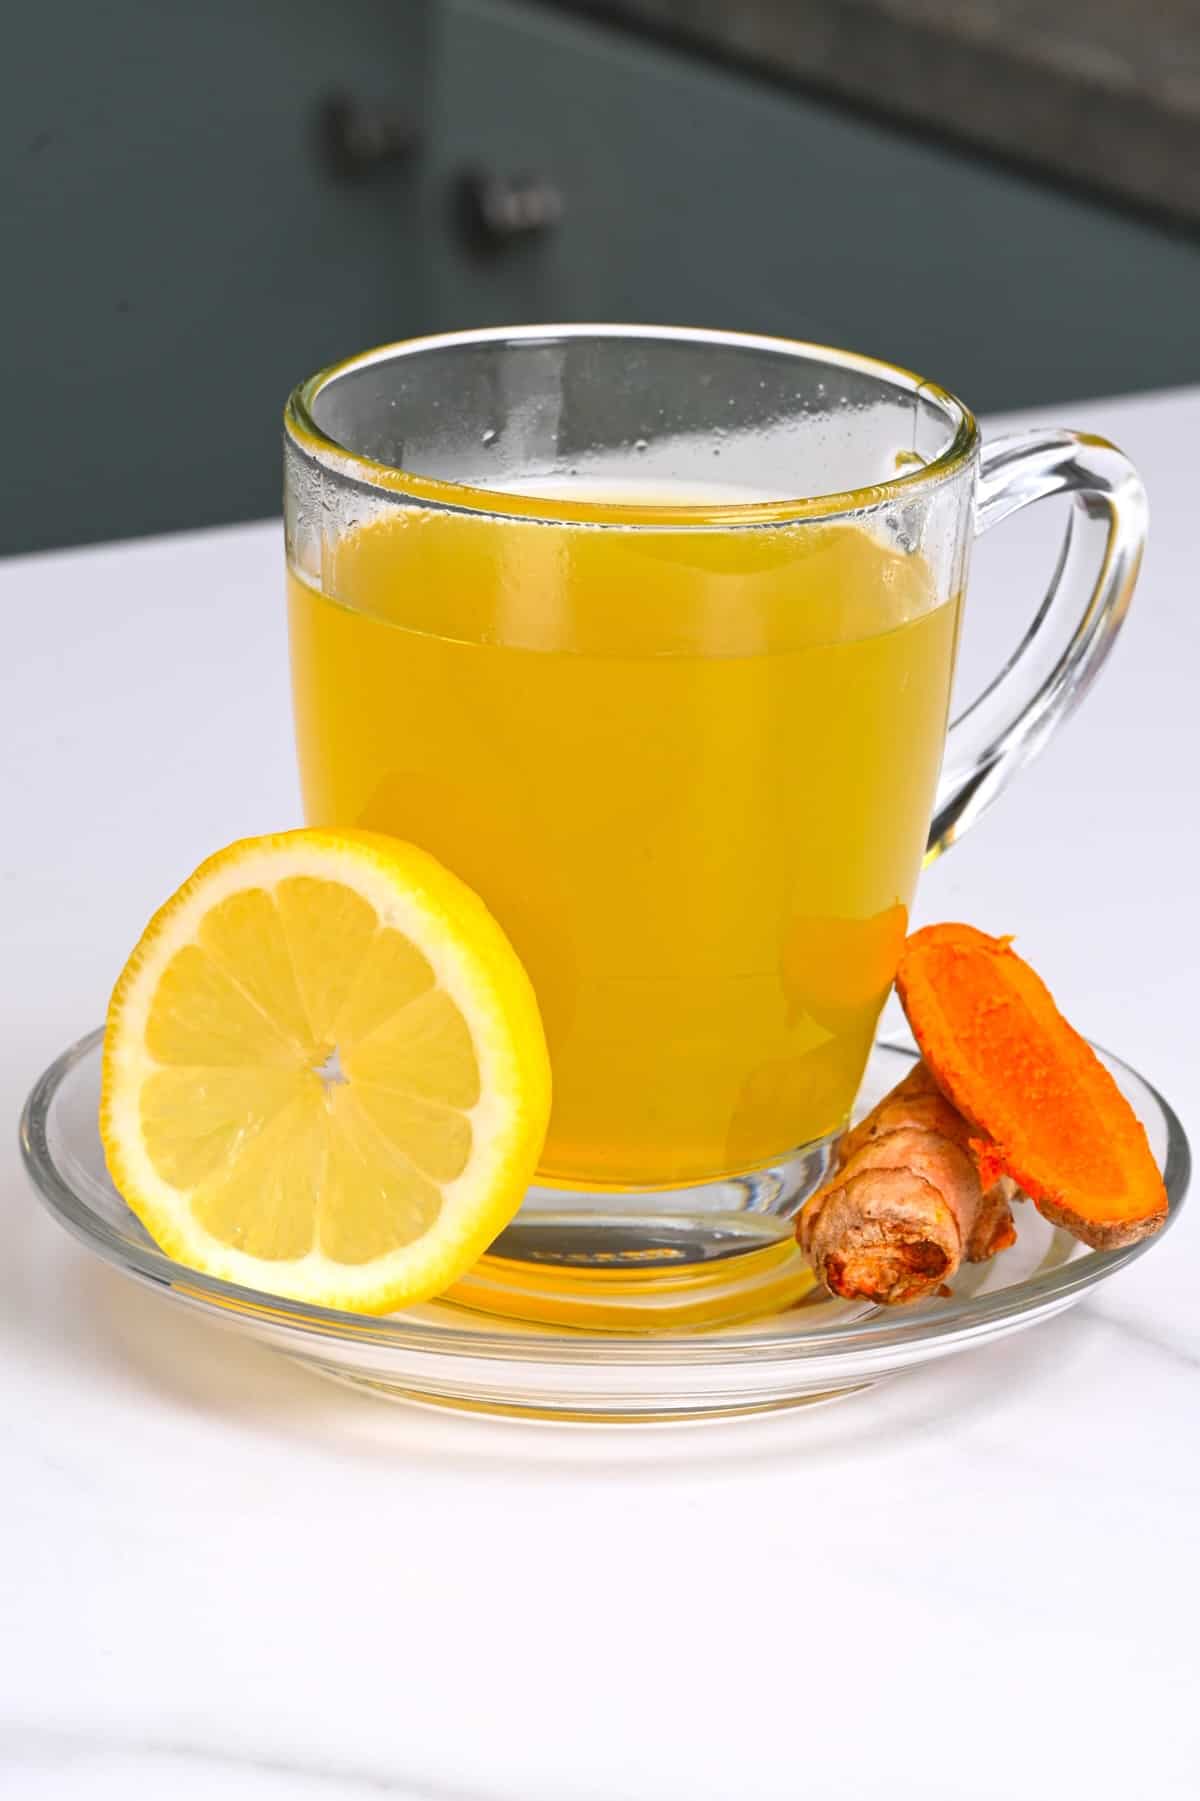 A cup with turmeric tea and lemon slice on the side